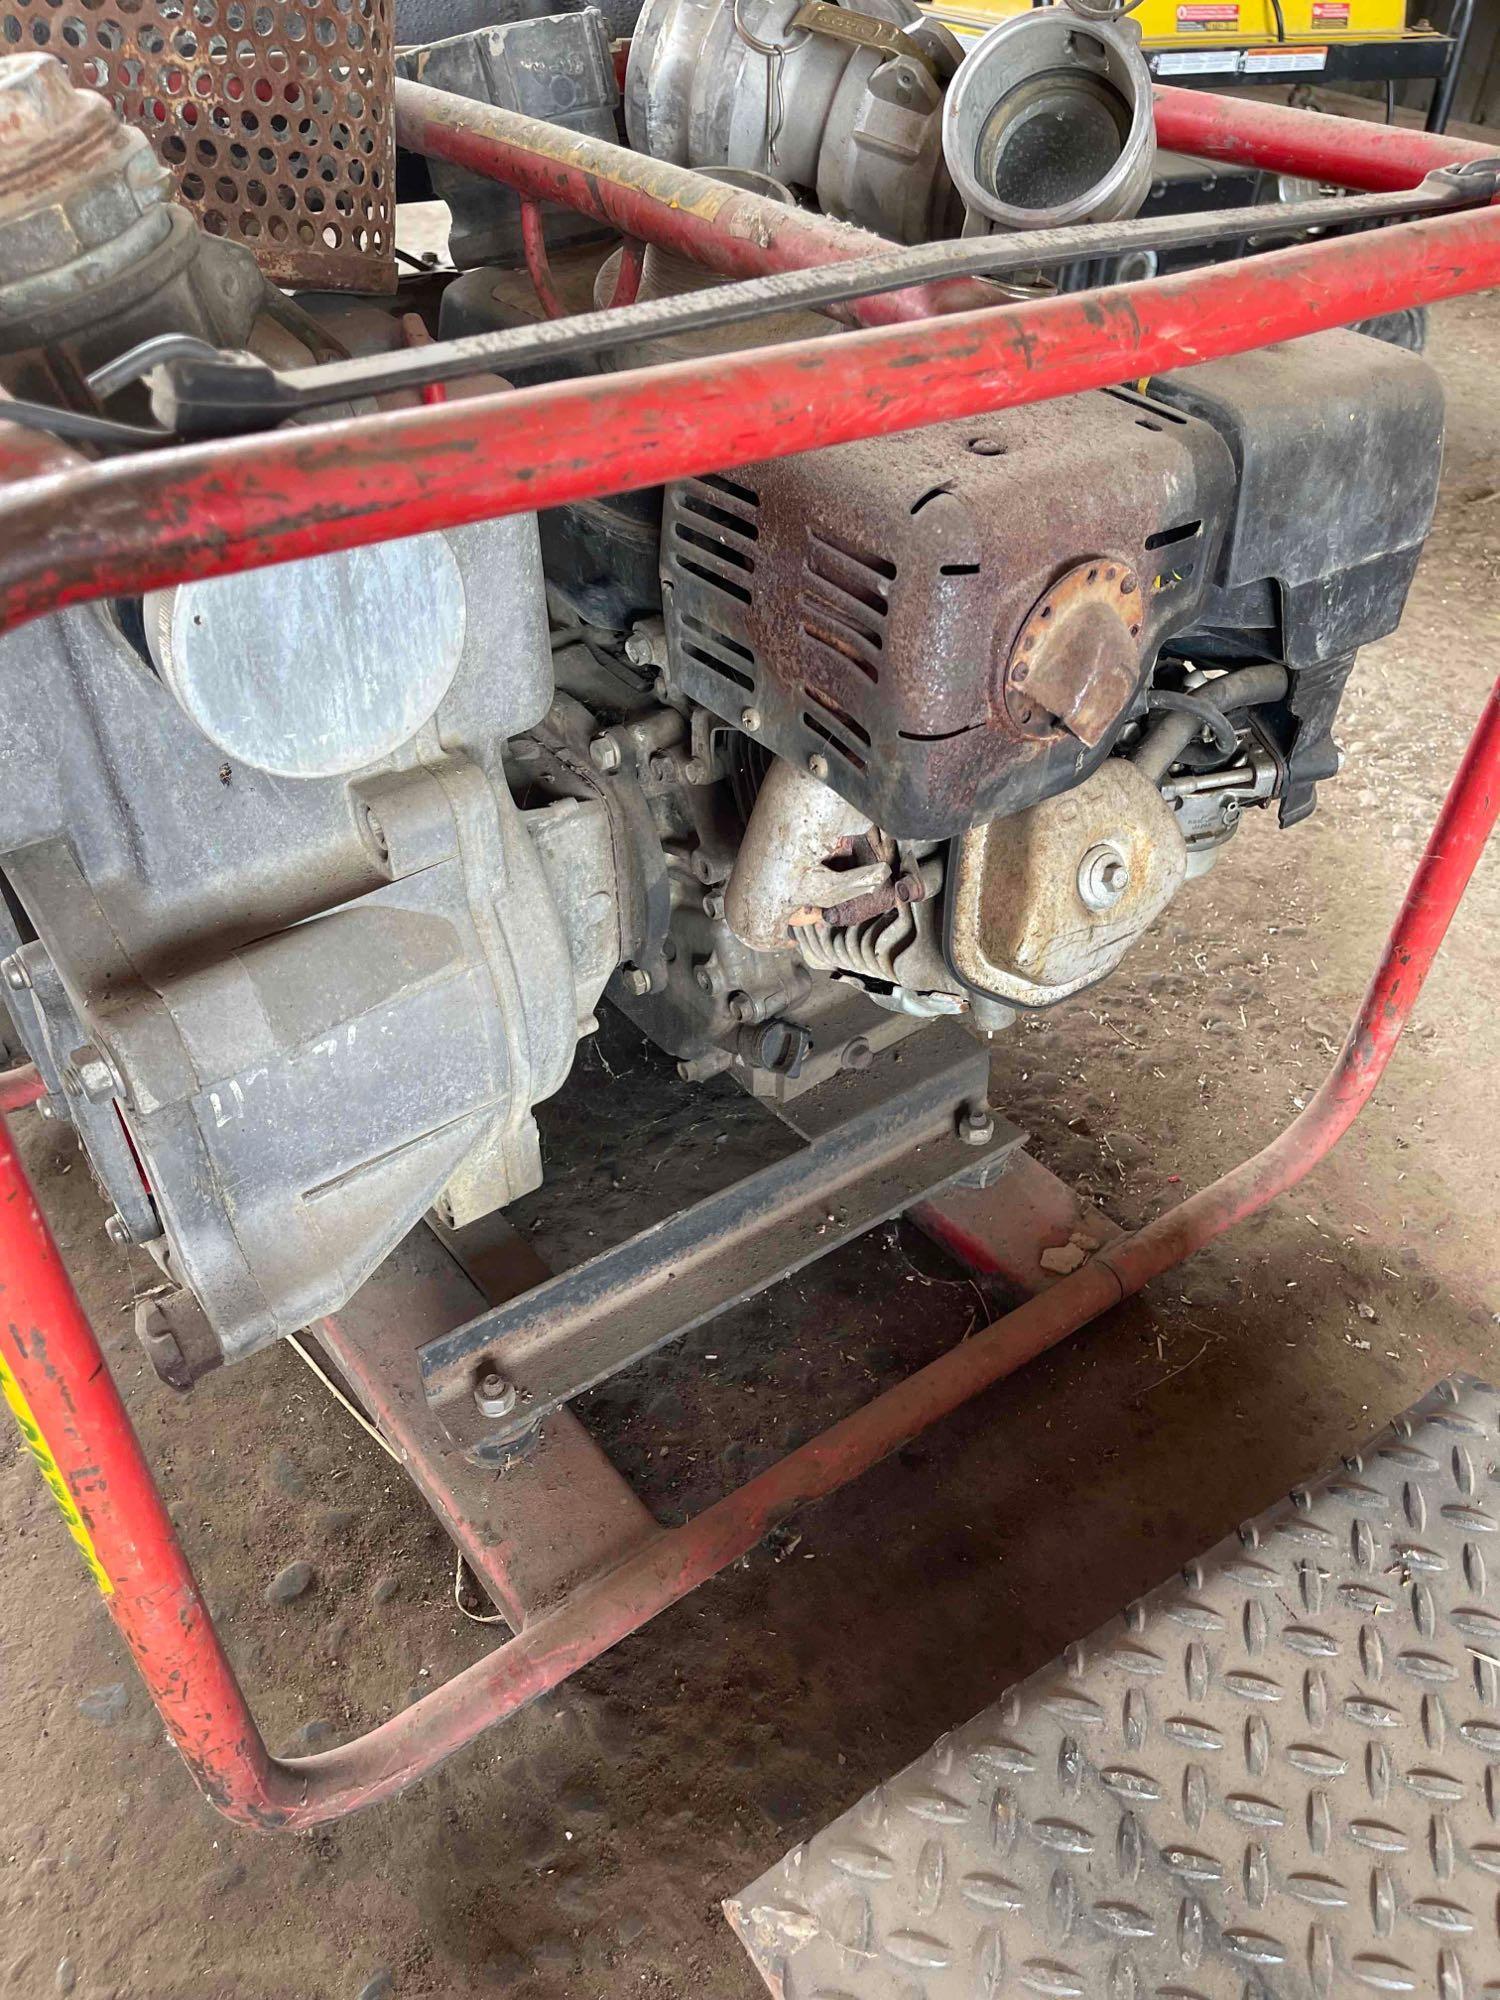 Trash pump w/ Honda 8 hp engine, been sitting in shop